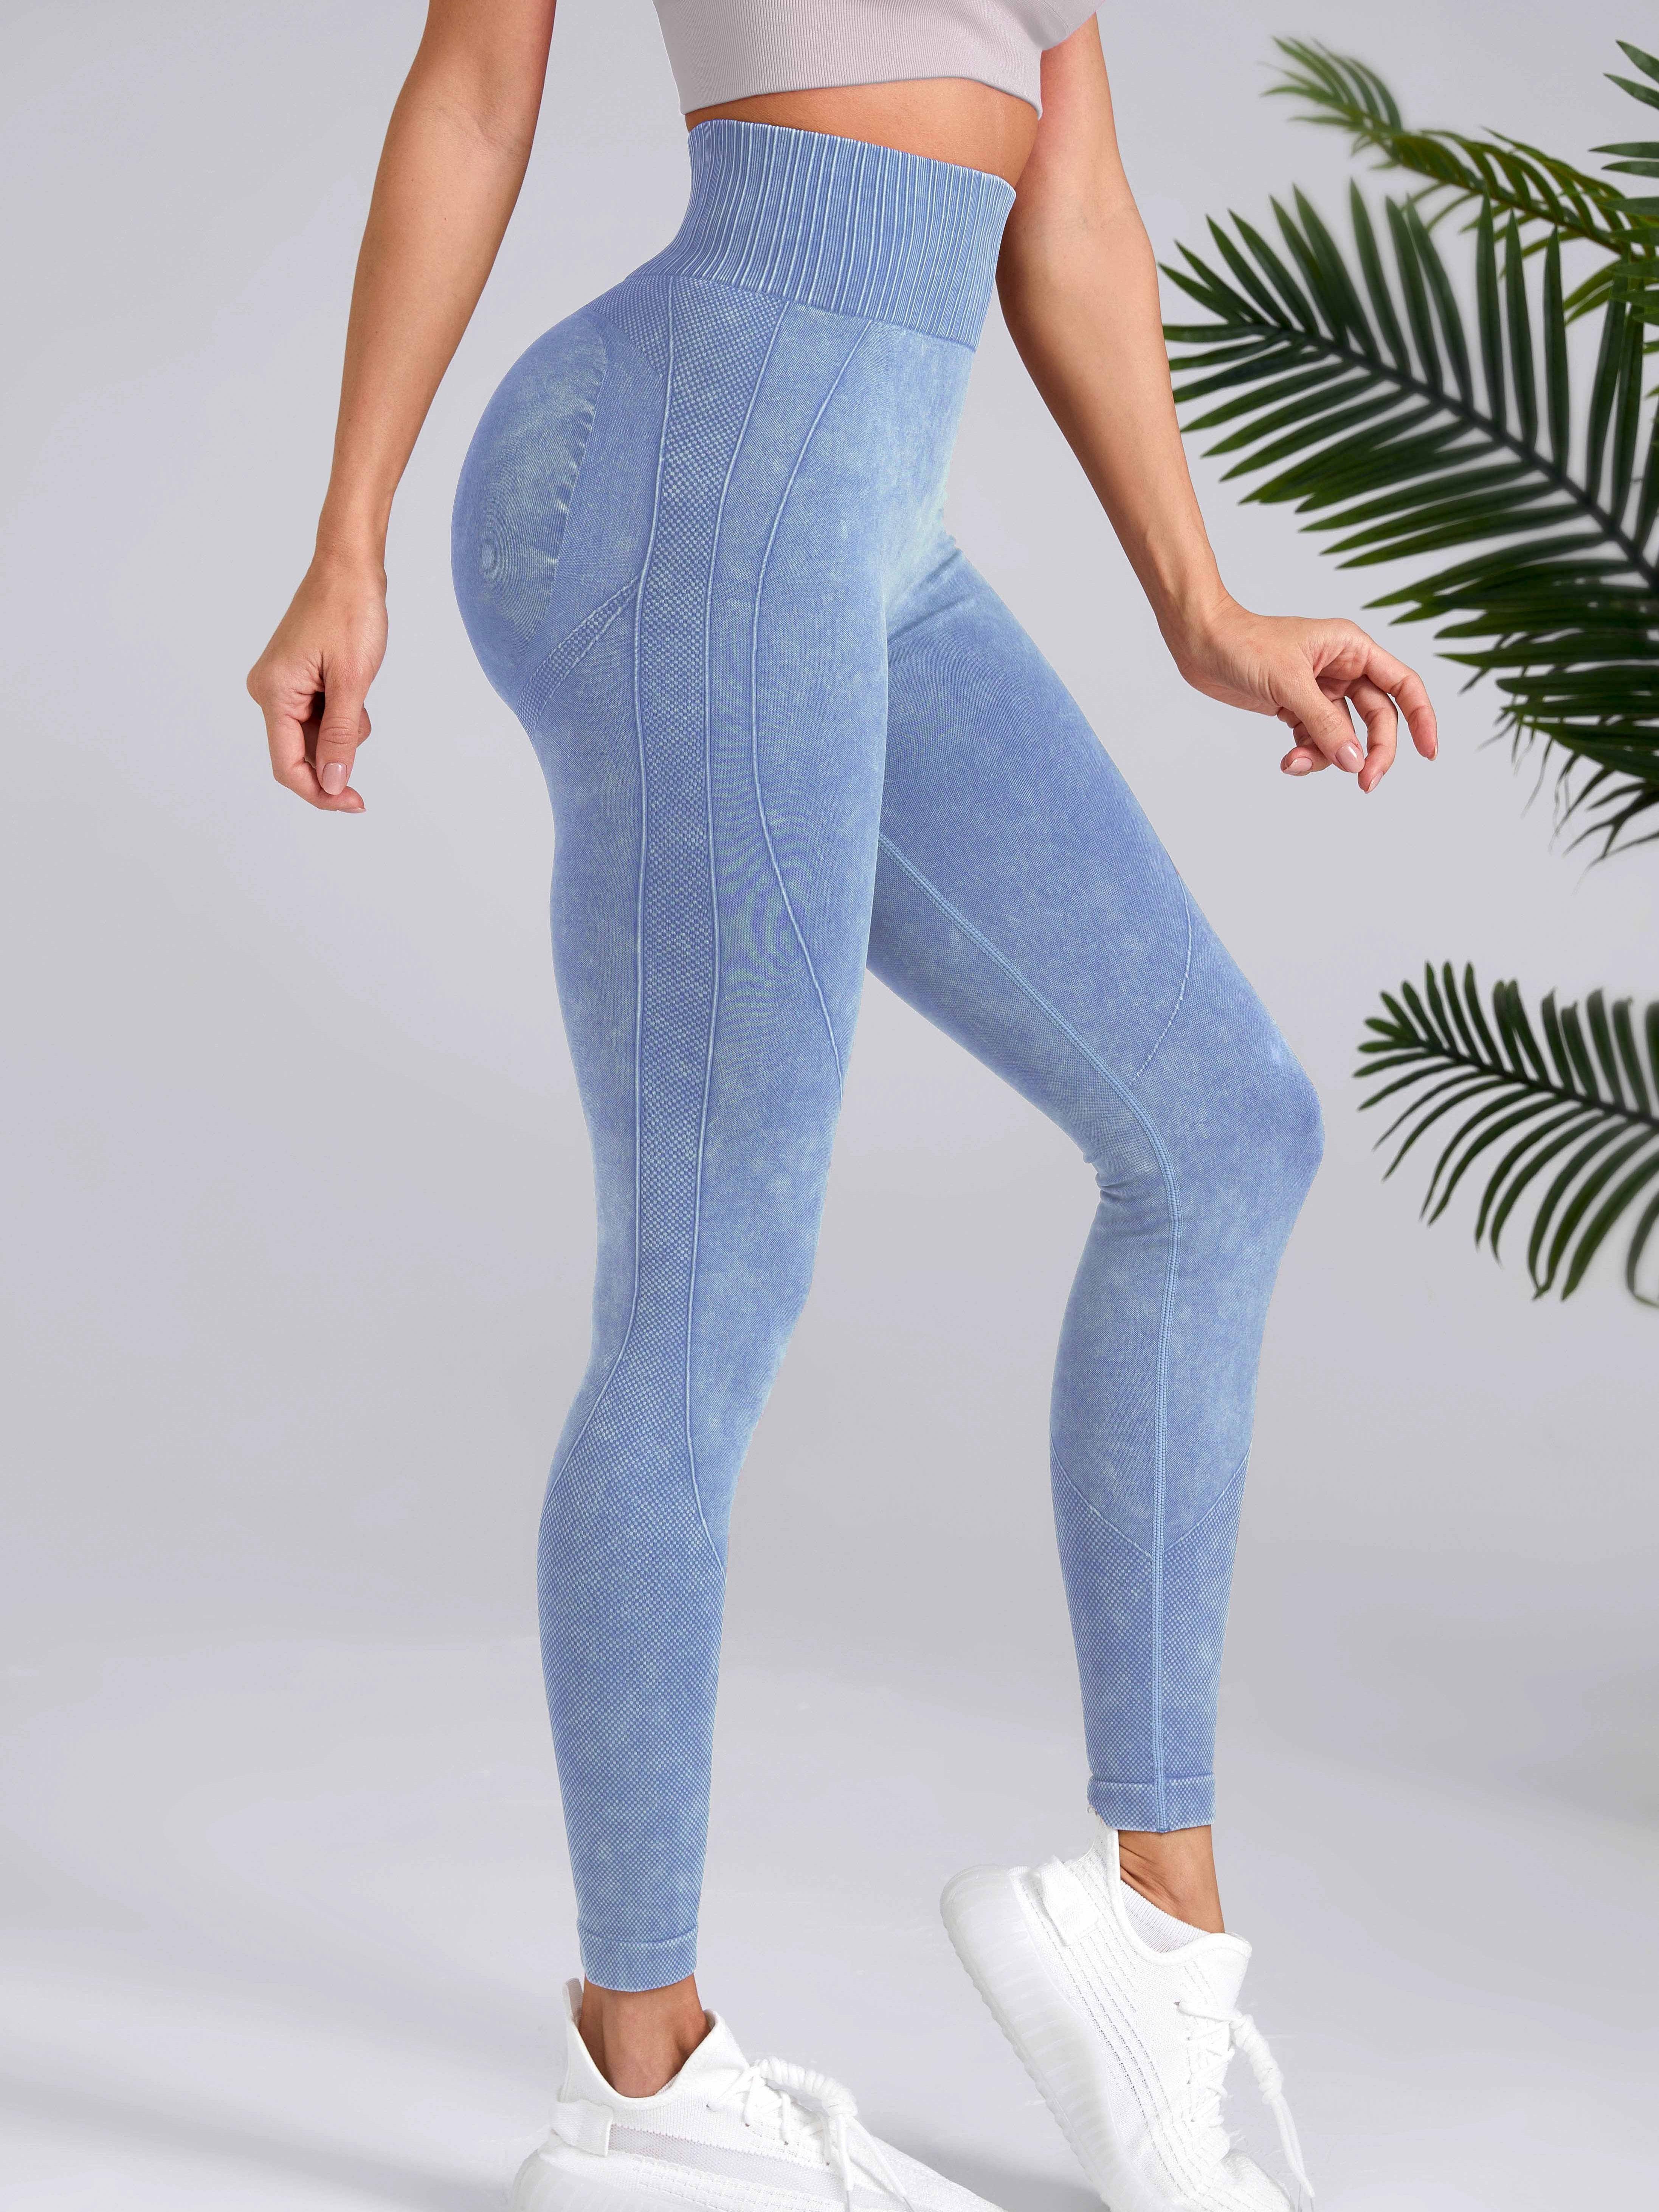 Women's Solid Pants Tummy Control Workout Leggings High Waist Yoga Pants  Blue M